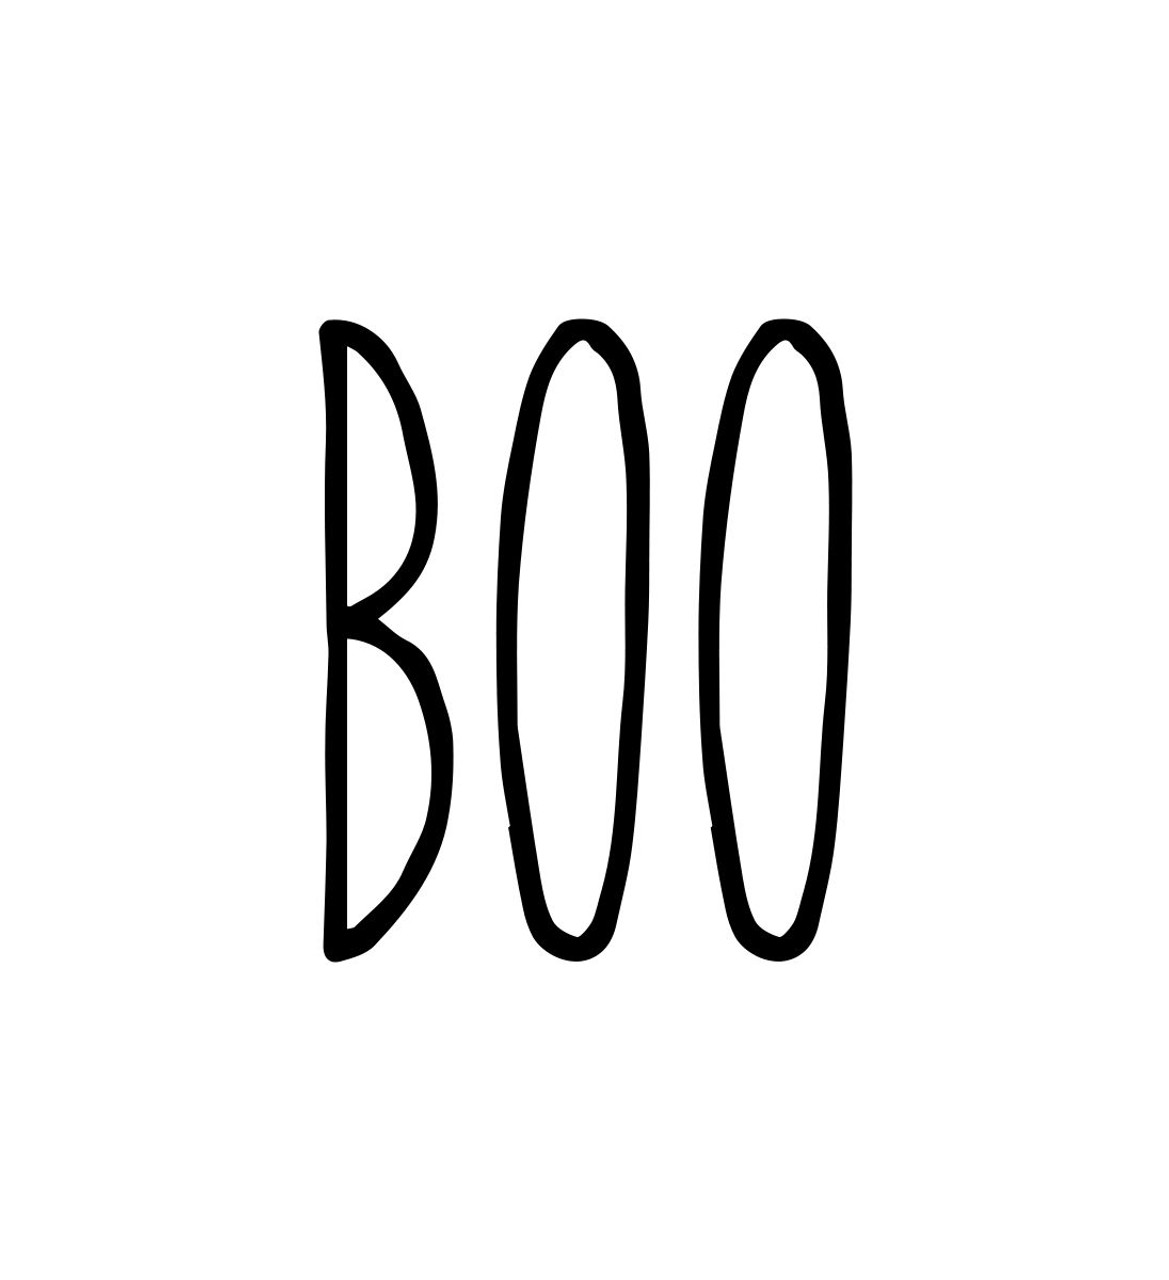 Boo Vinyl Sticker - Halloween Farmhouse Skinny Font Rae Dunn Inspired - Die Cut Decal